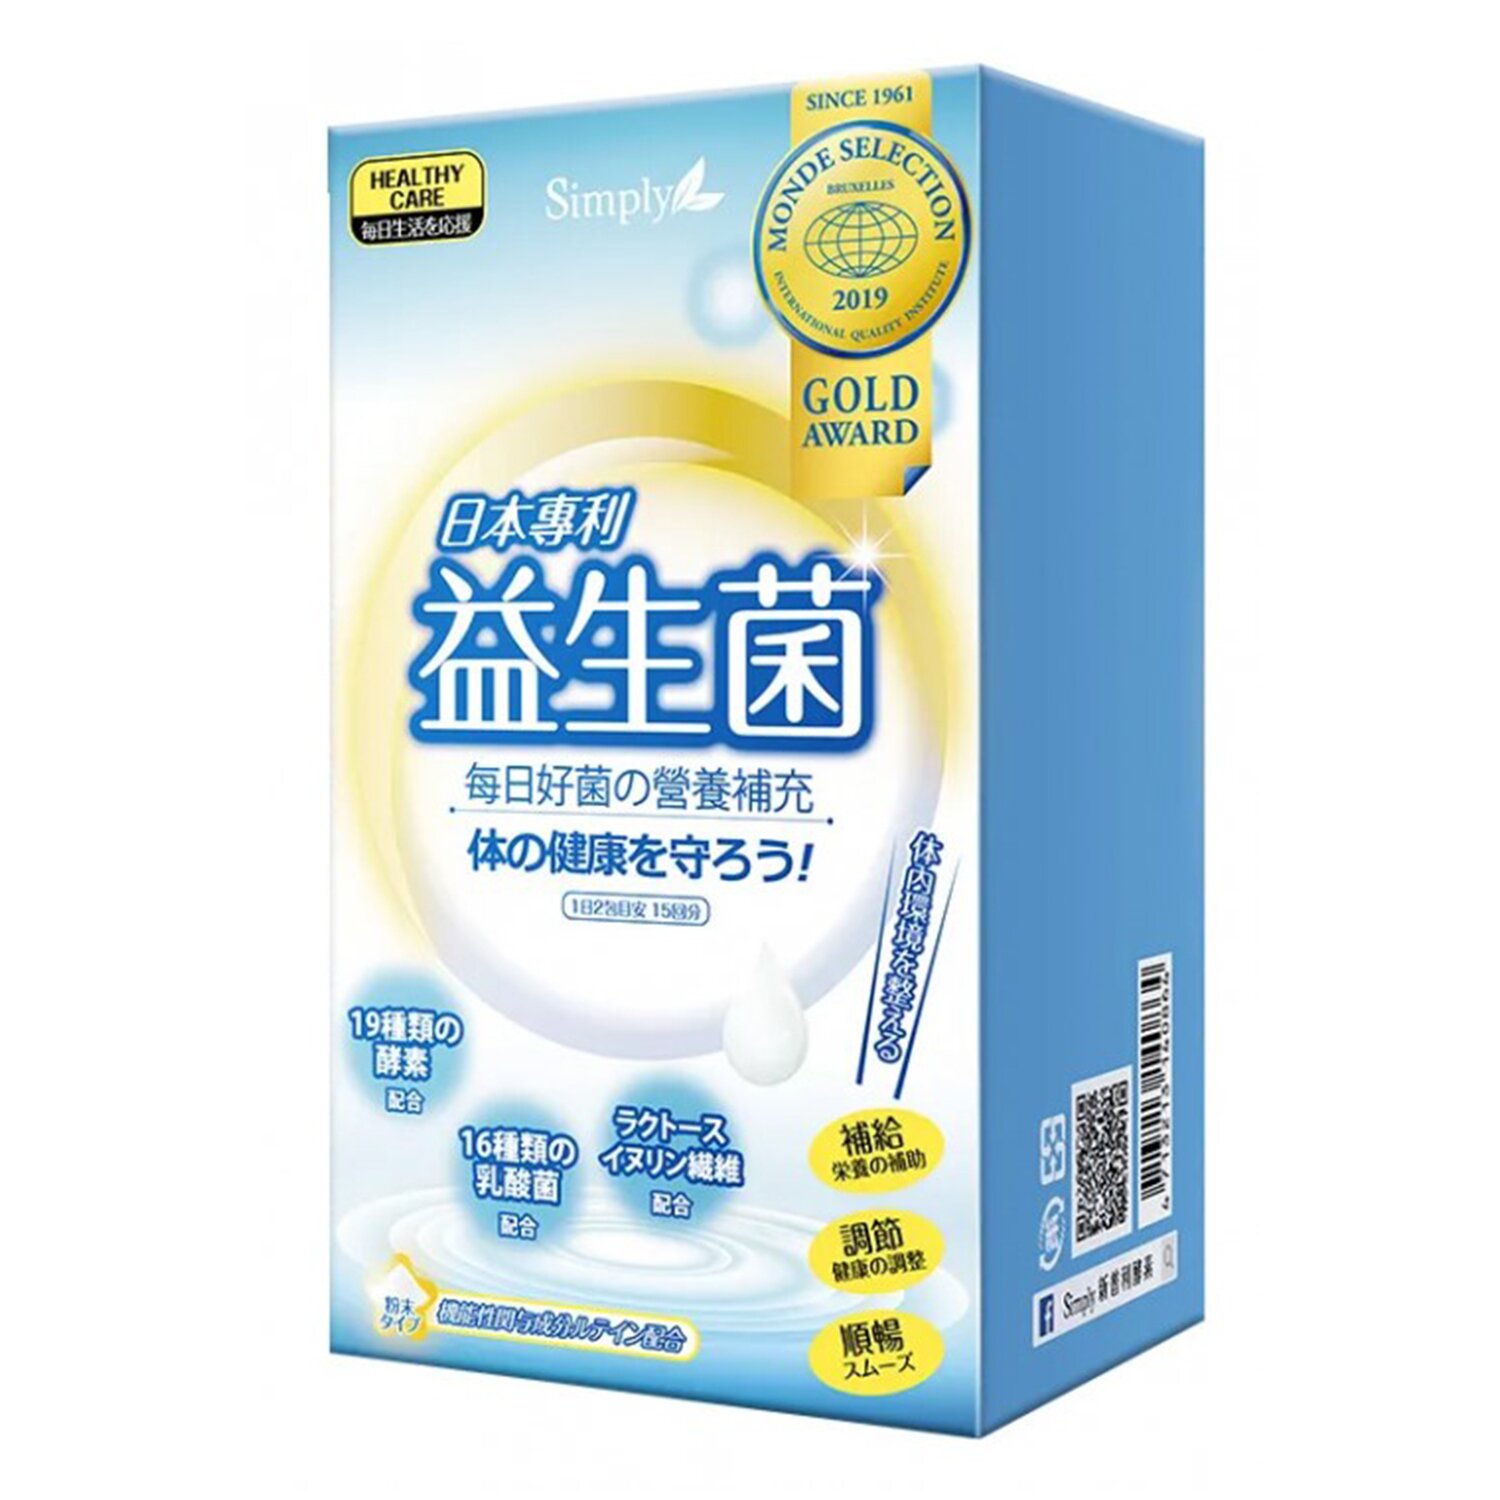 Simply Simply Japanese Patent Probiotics 30 Bags